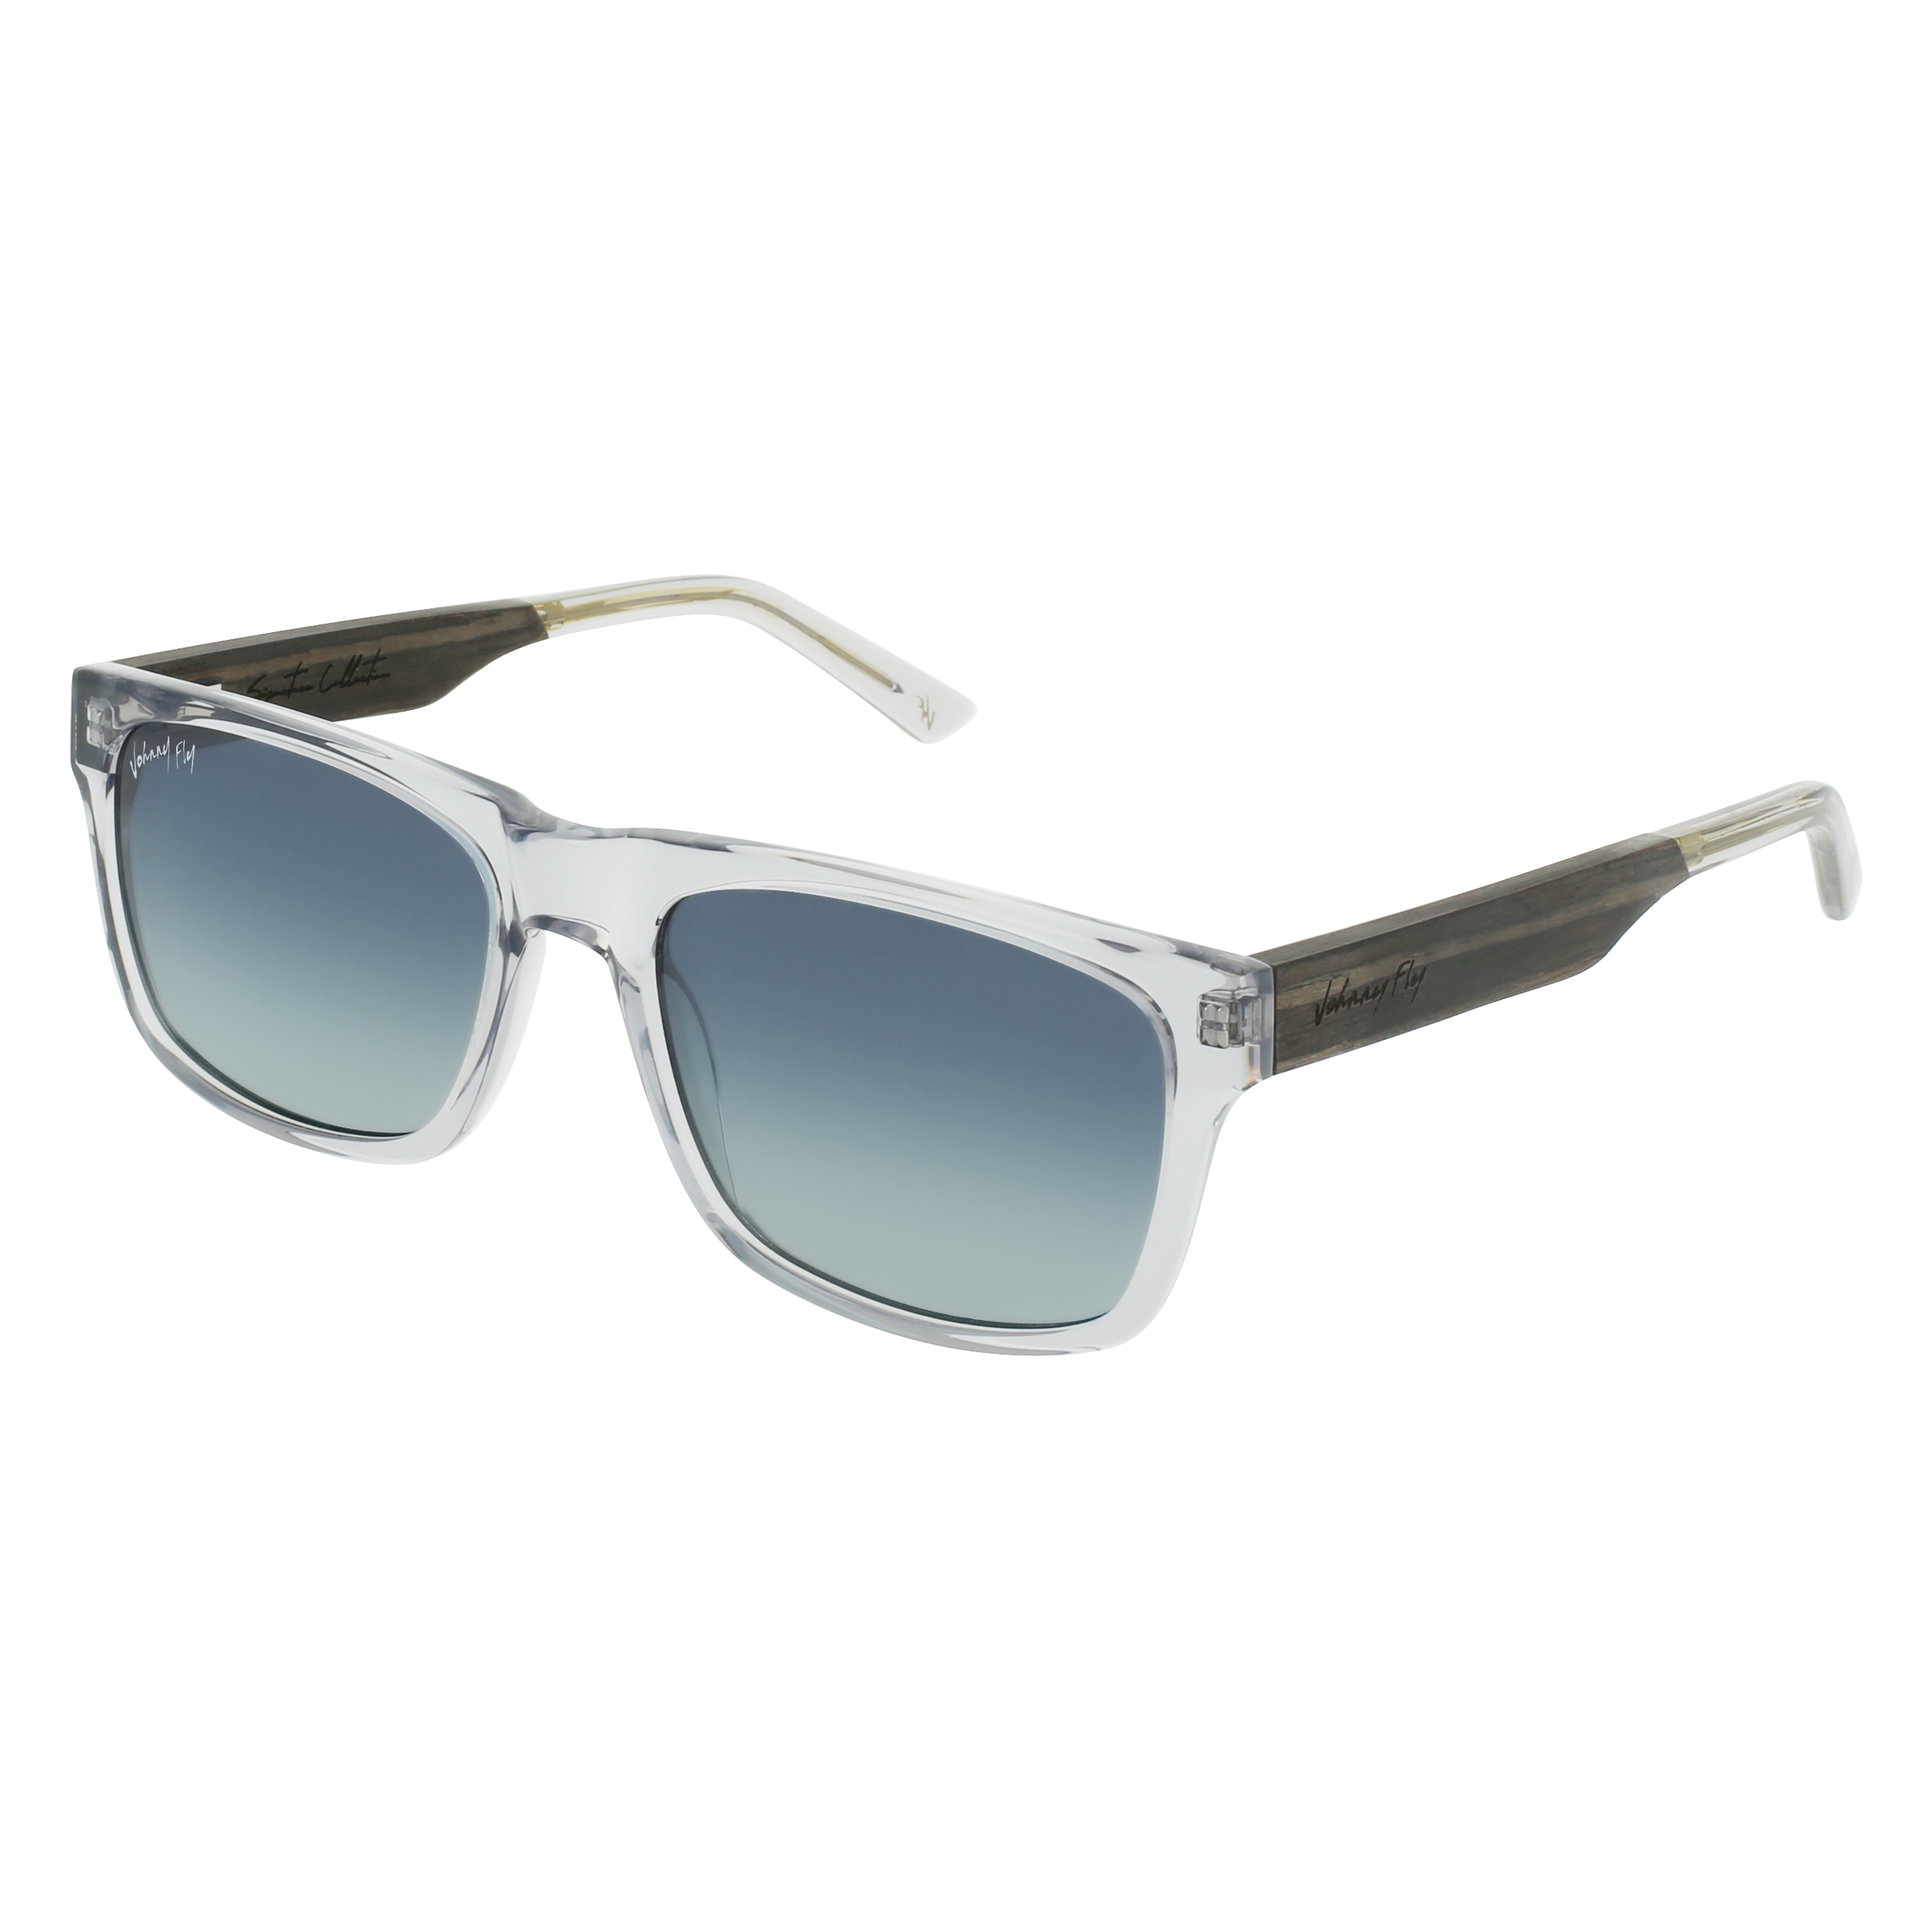 Salvador tinted sunglasses in grey